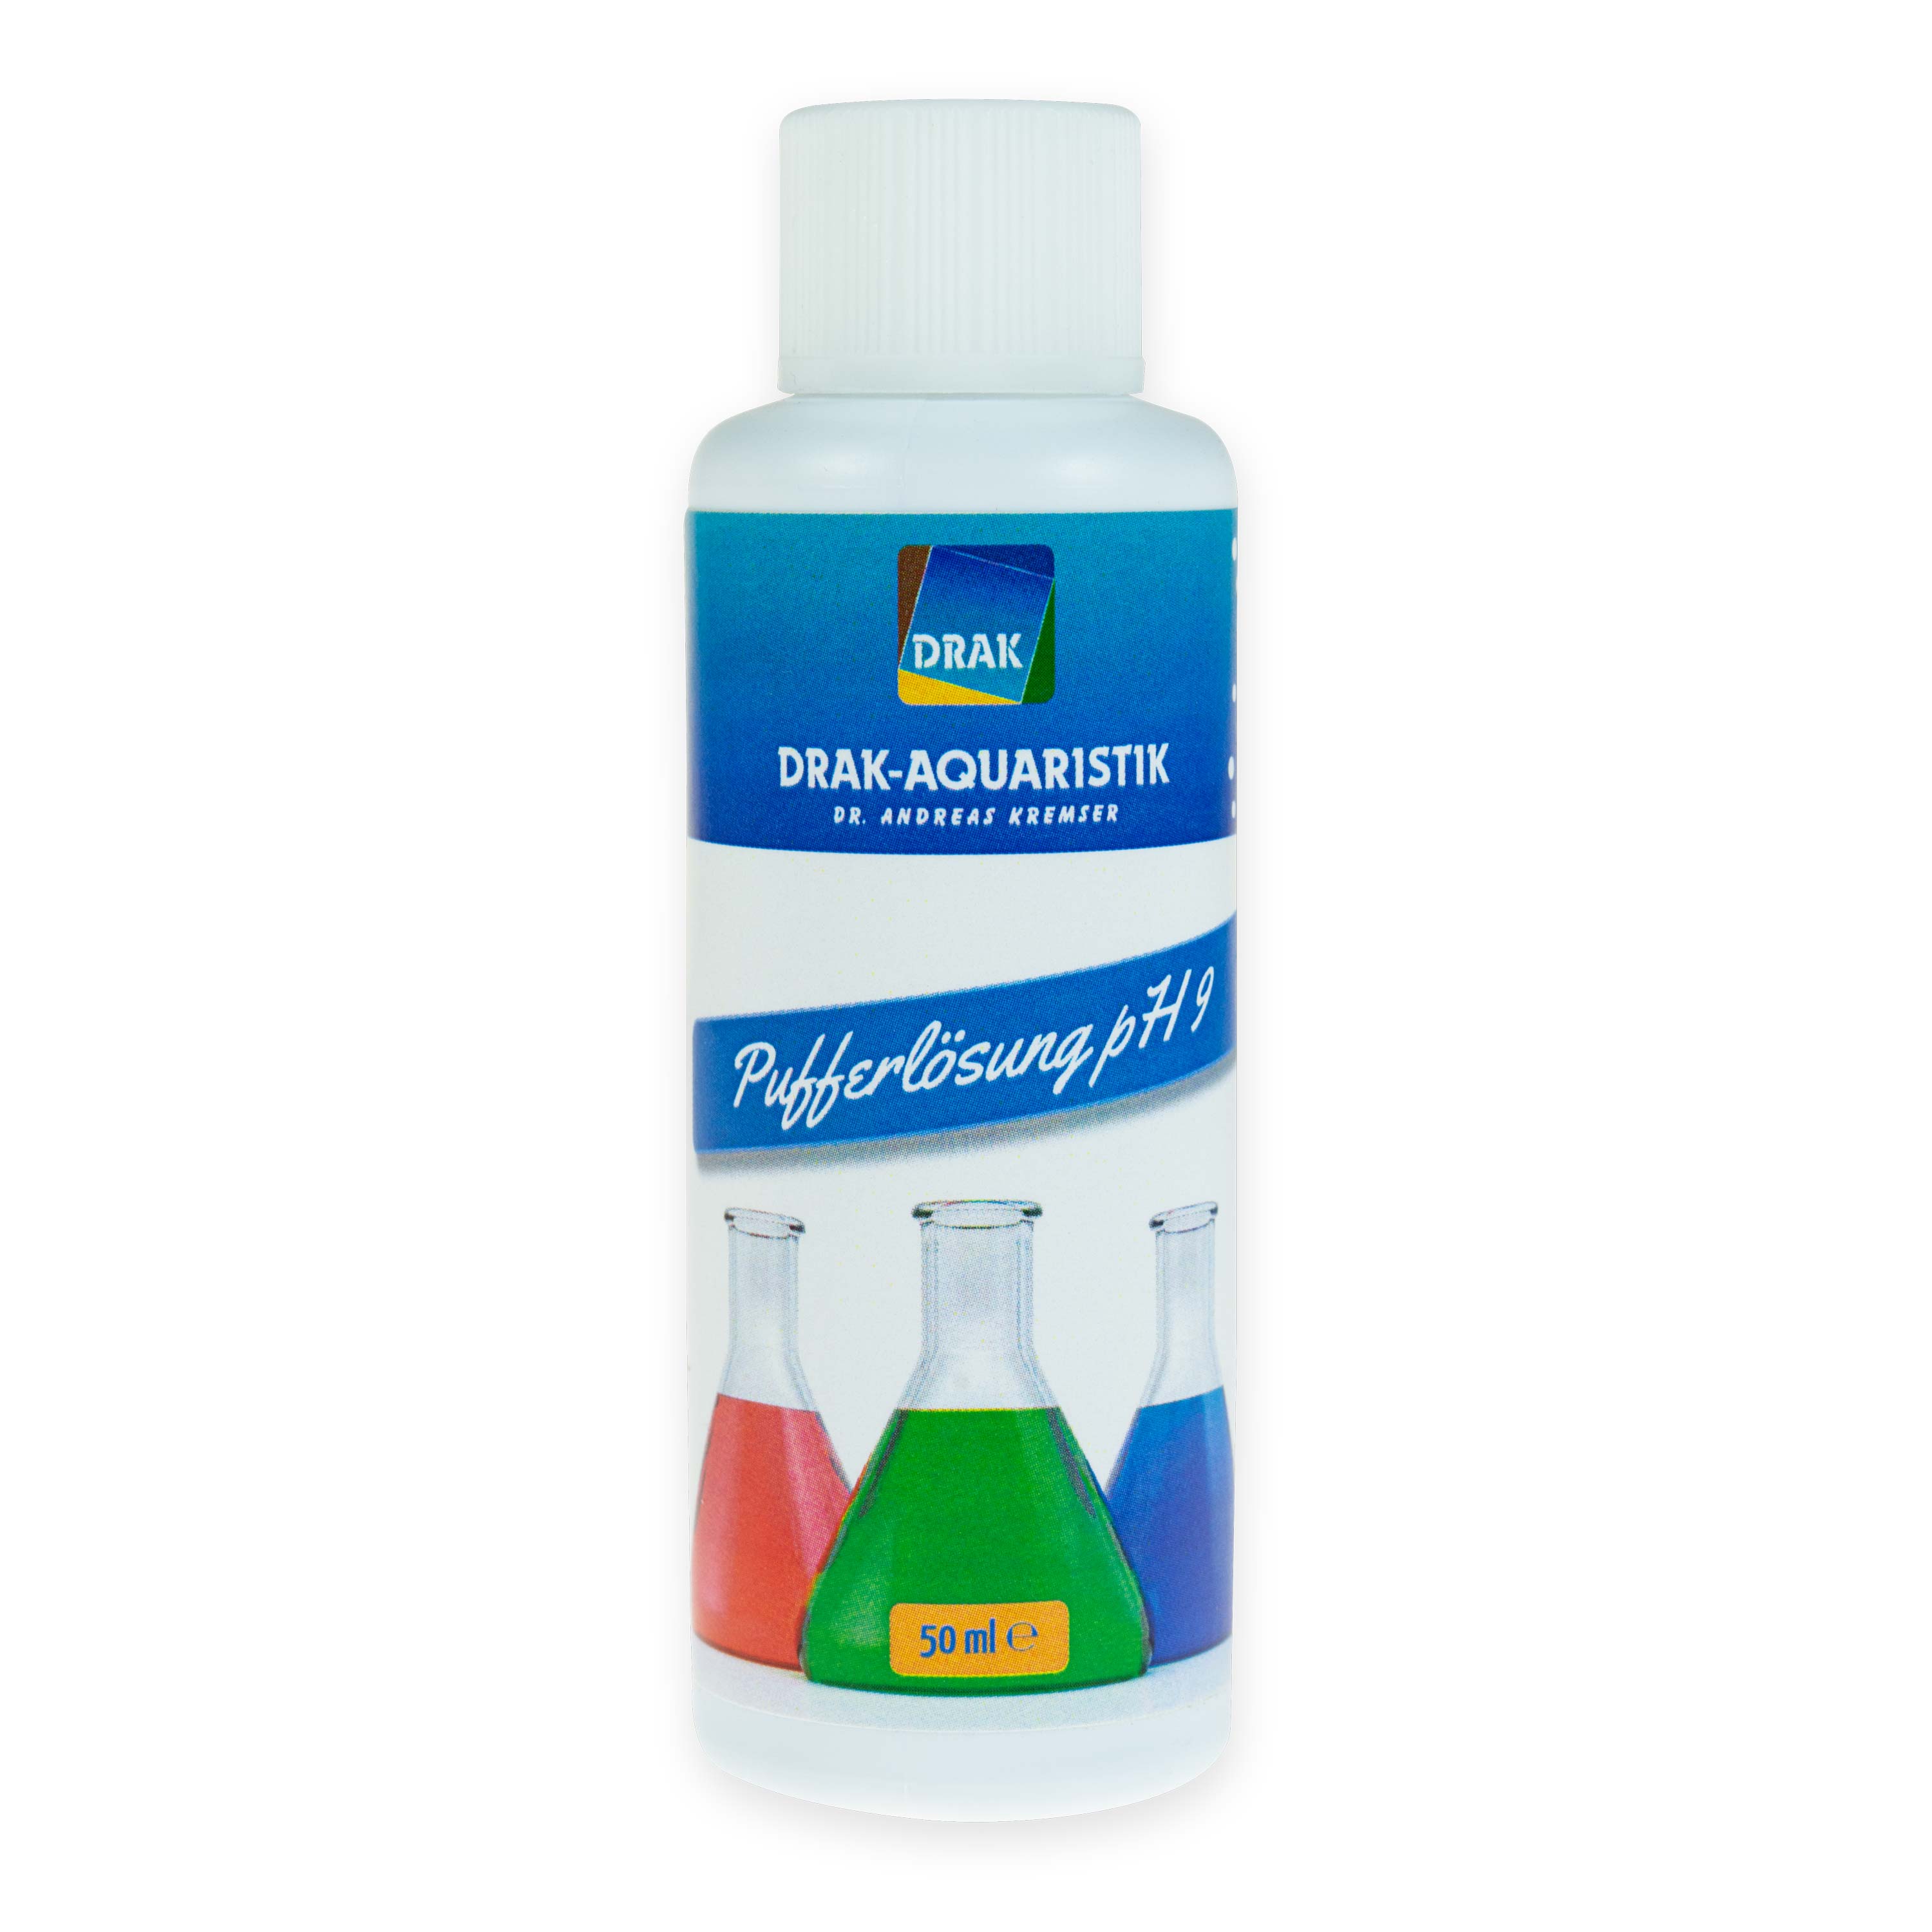 Buffer pH 9 (20 °C) - blue colored - 50 ml